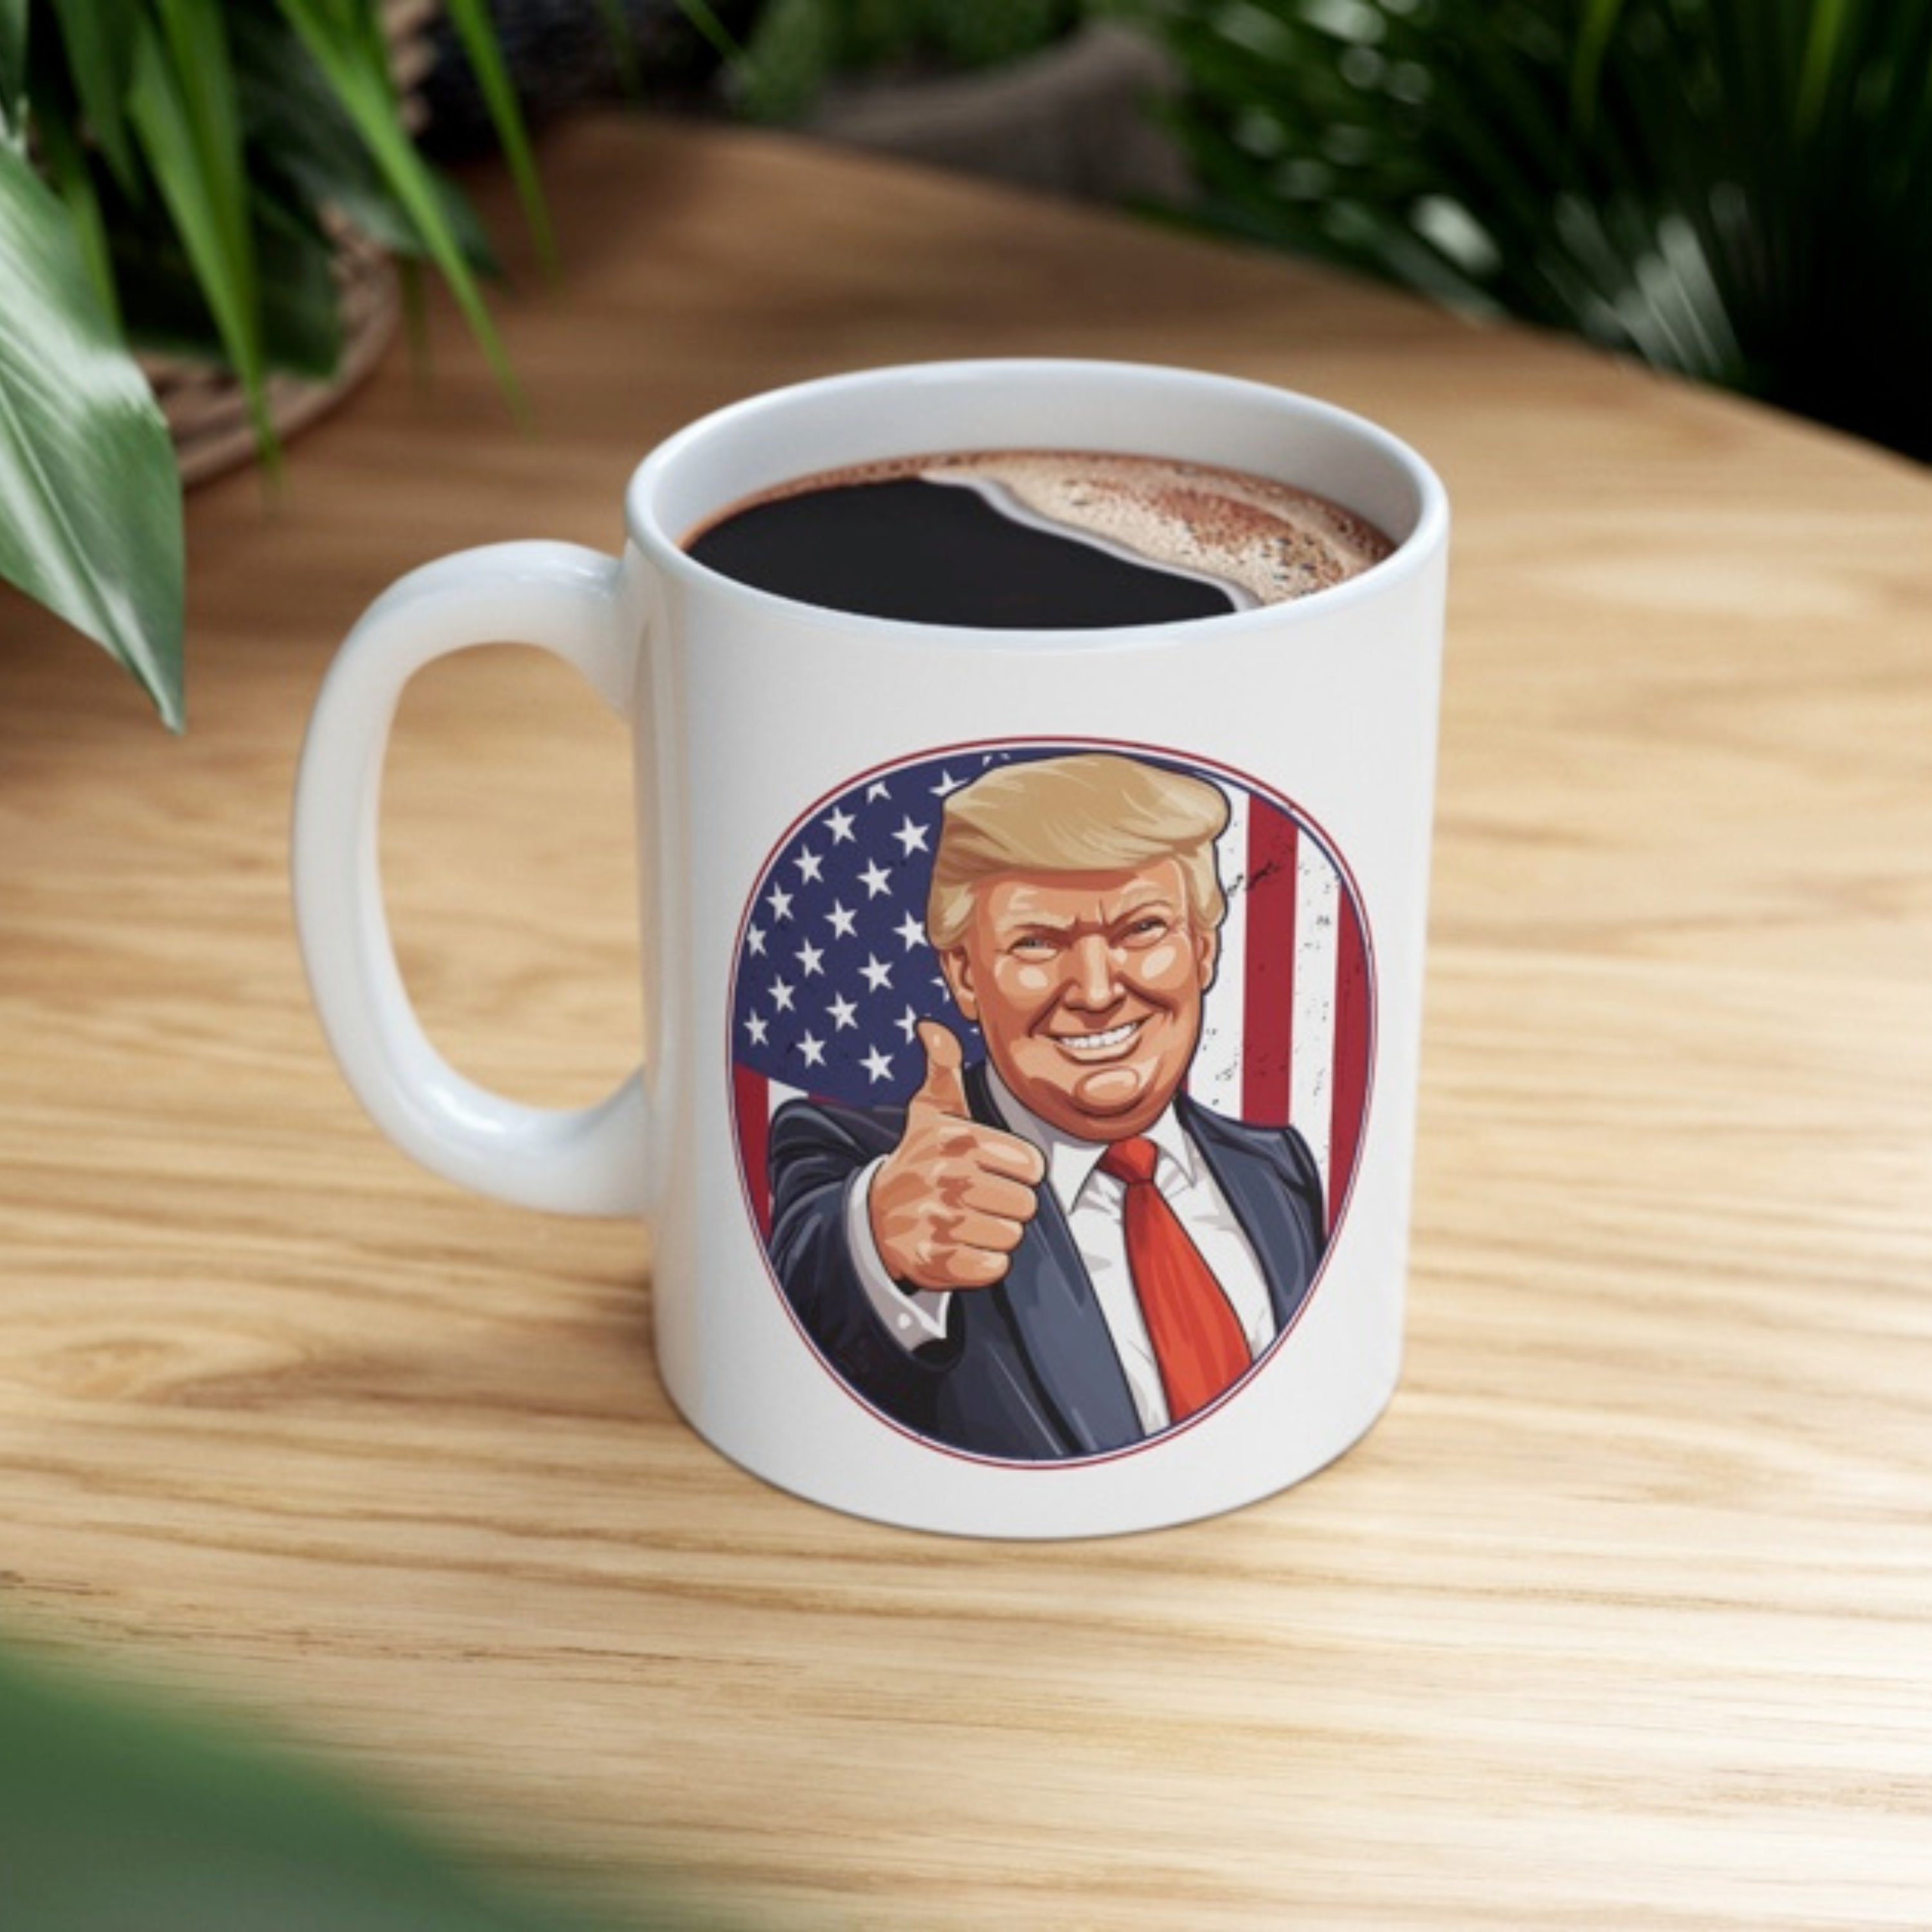 Donald Trump Thumbs Up Mug - DJT - 45 - Soon 47 - 11oz White Ceramic